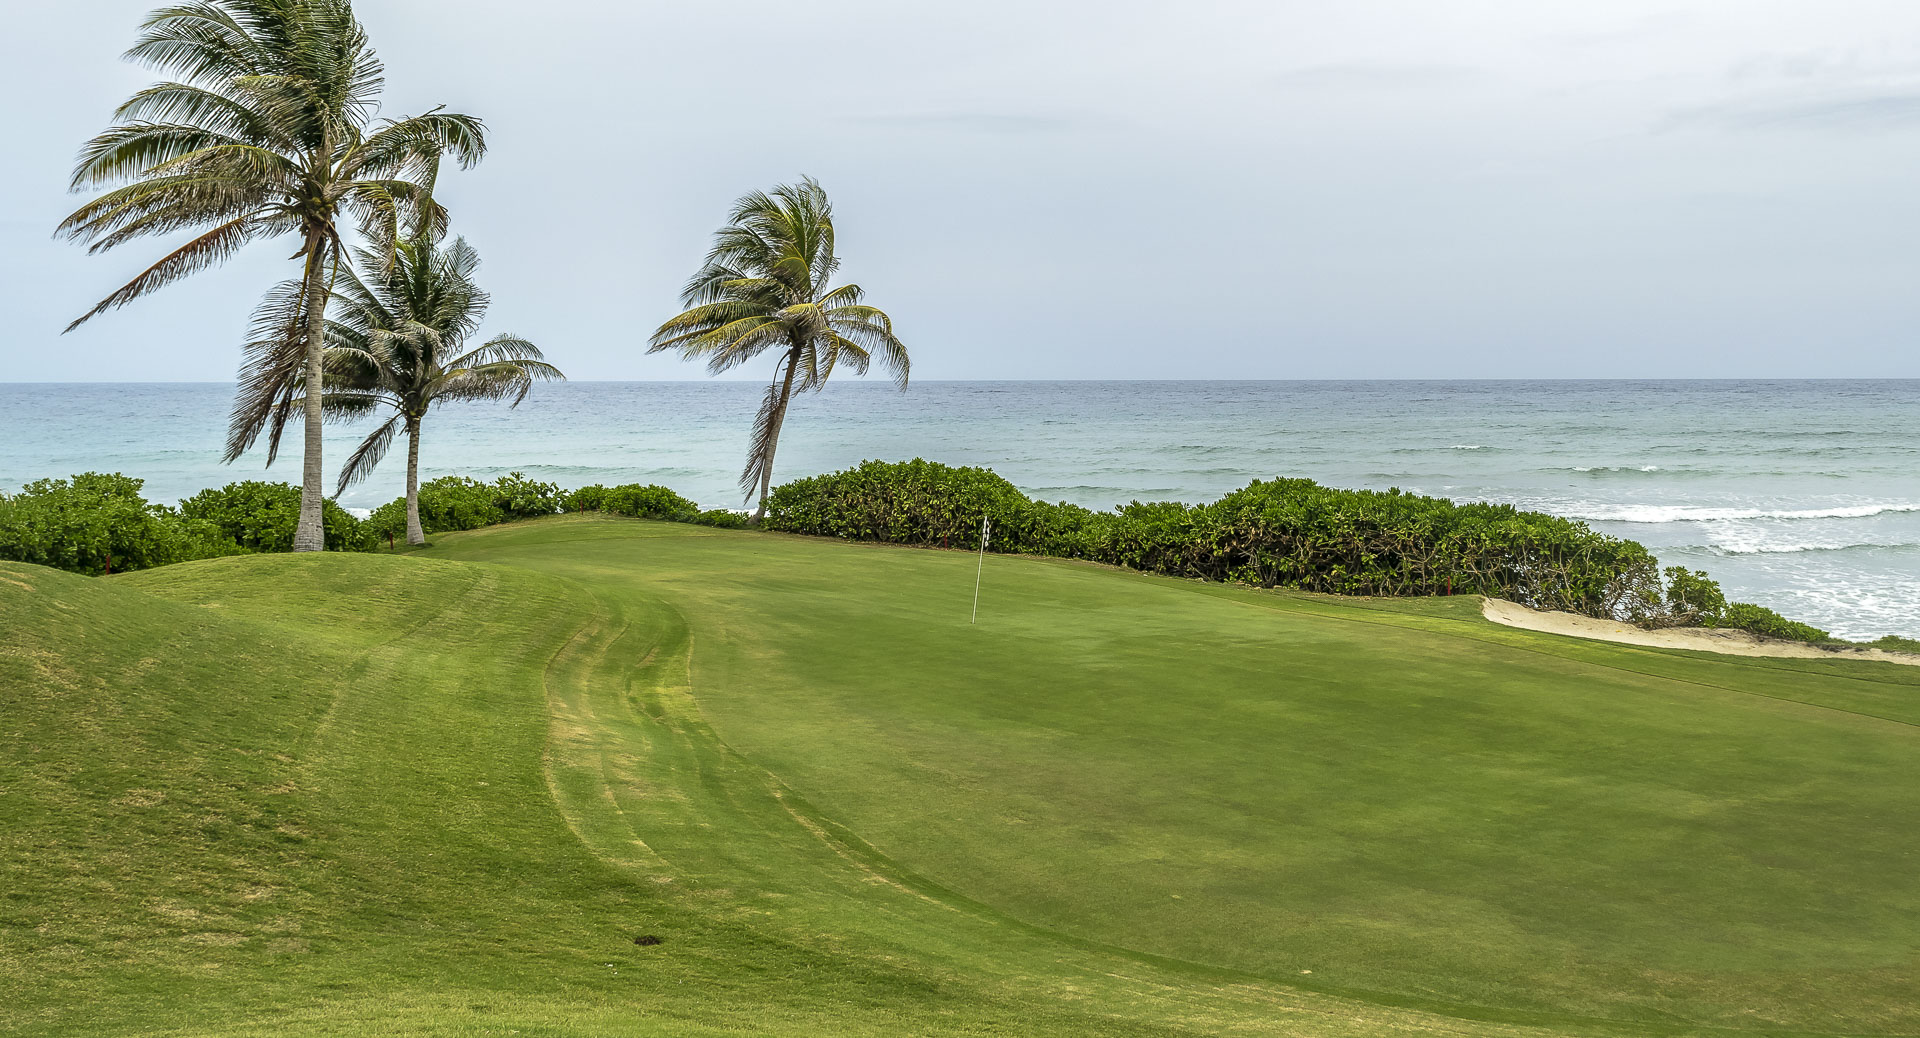 Golf Course in Jamaica